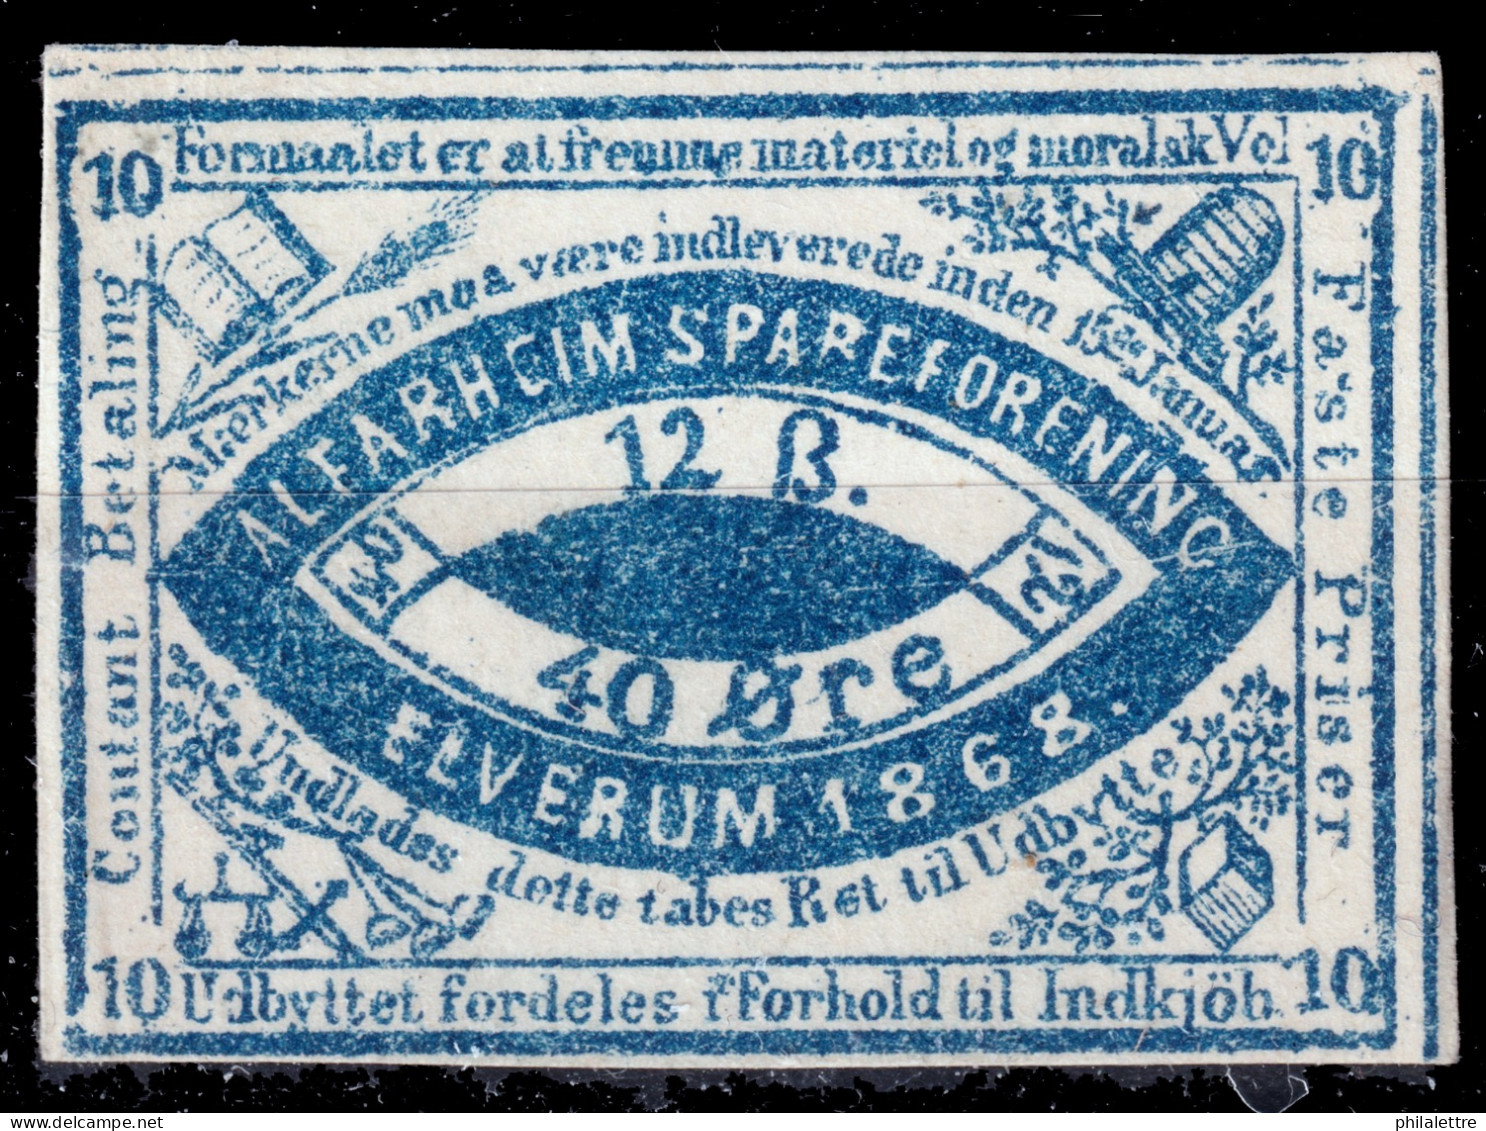 NORVÈGE / NORWAY - Savings Stamp / Label  "ALFARHEIM SPAREFORENING" 40 øre Blue - On Card, No Gum - Revenue Stamps